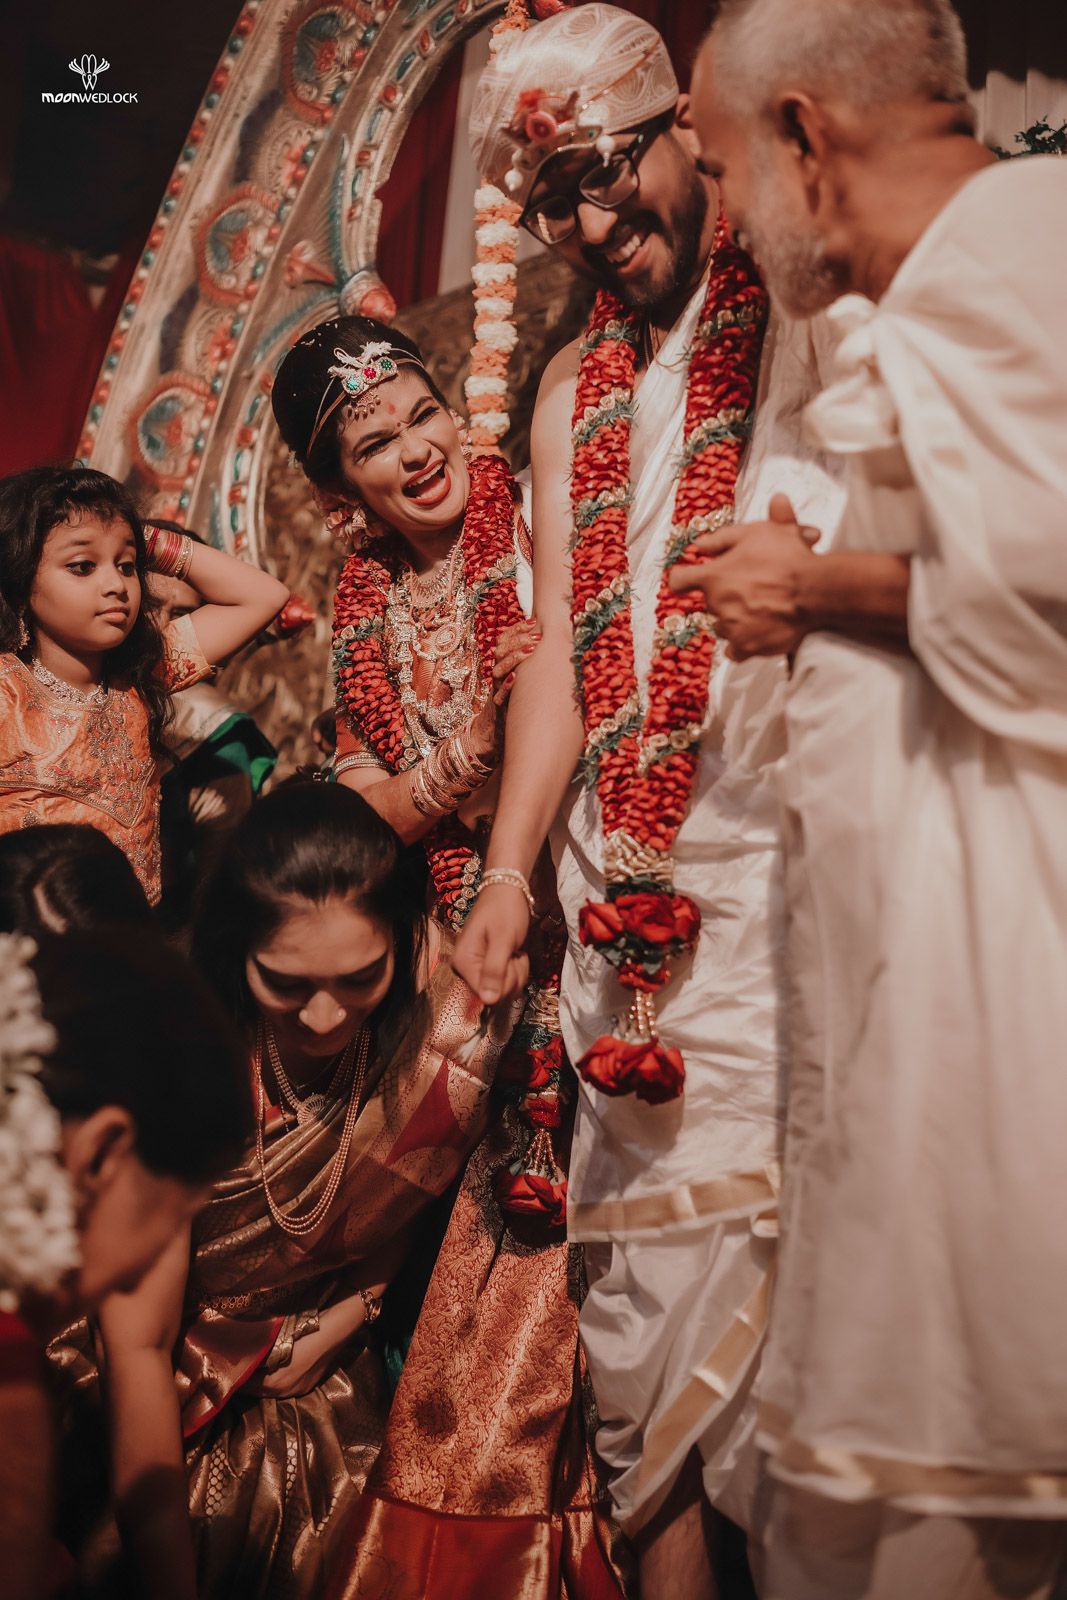 kannada-wedding-photographers-in-bangalore-moonwedlock (27)